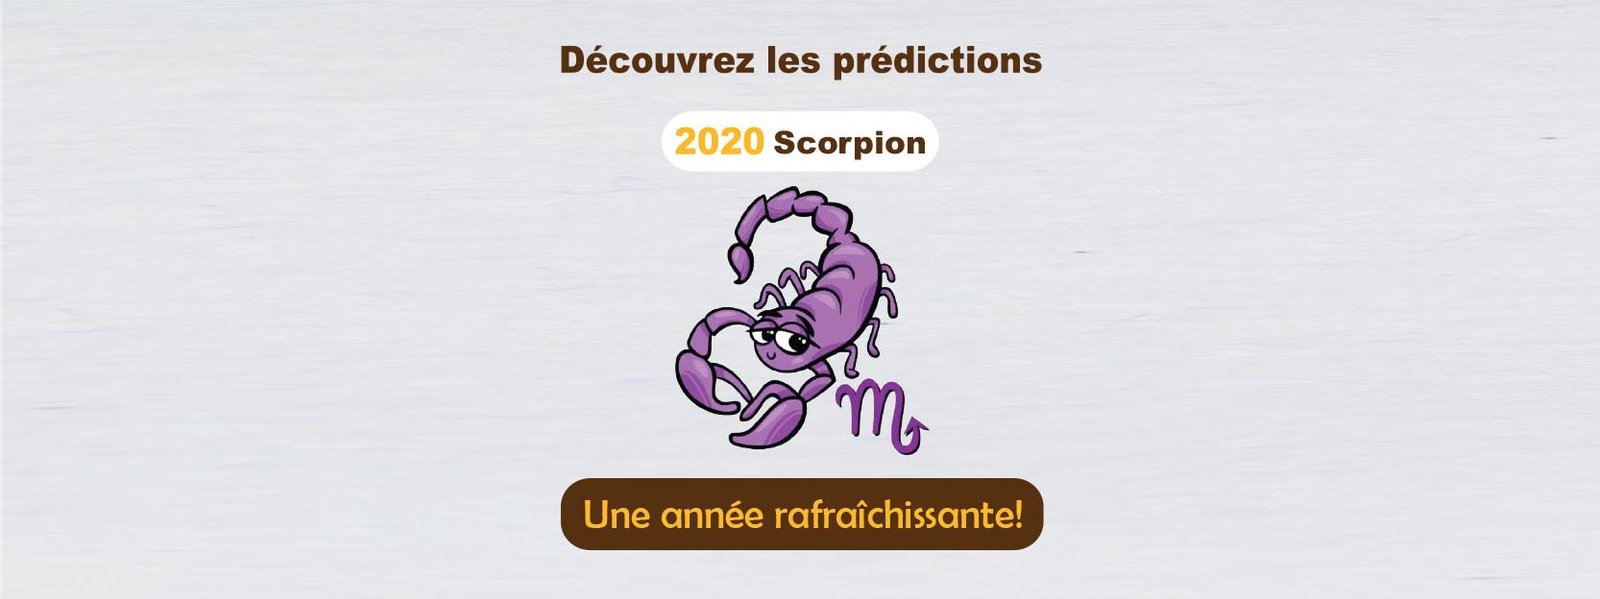 Prédiction 2020 Scorpion